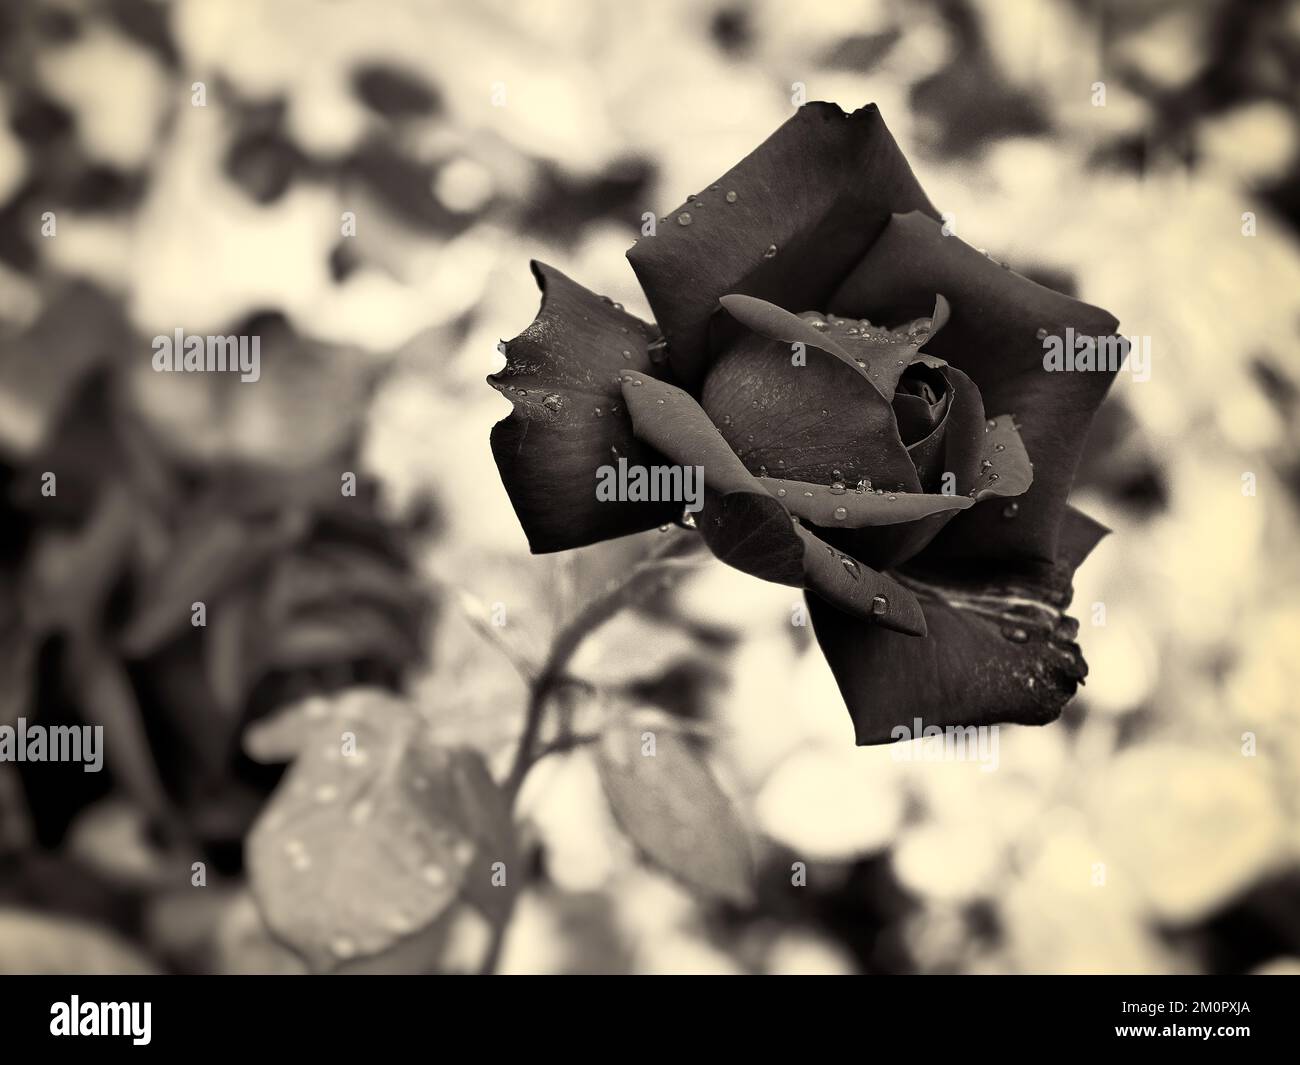 Primer plano en escala de grises de una rosa con gotas de agua sobre un fondo borroso Foto de stock